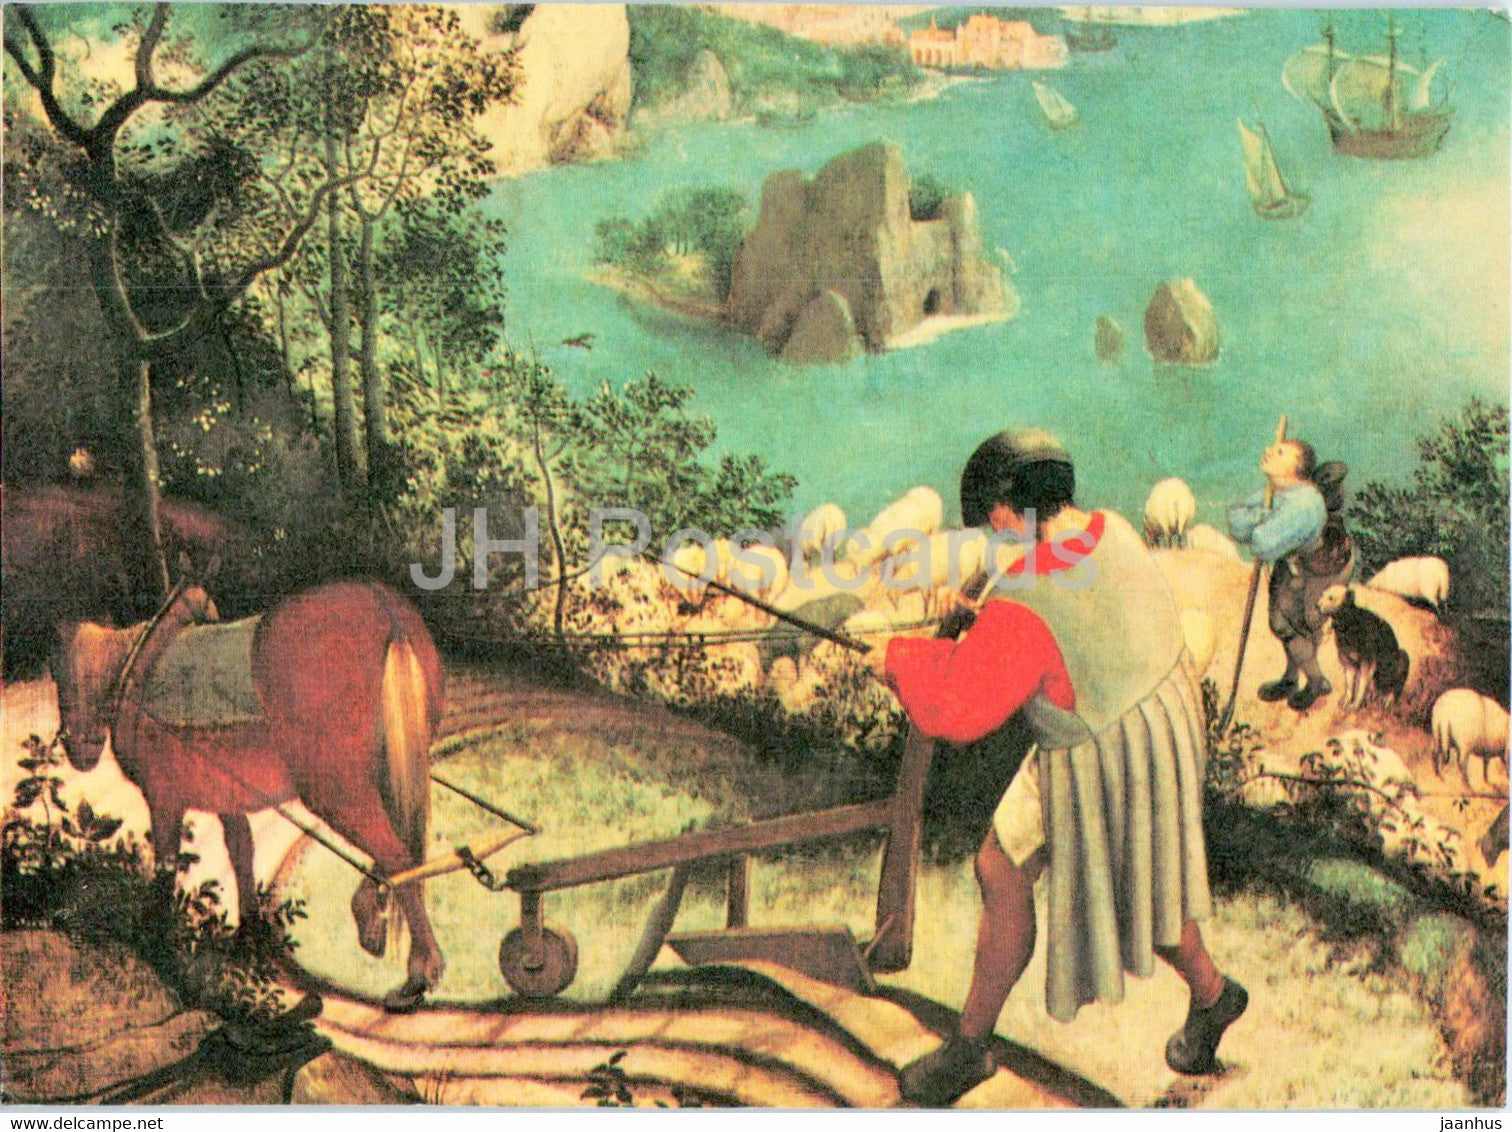 painting by Pieter Bruegel the Elder - Landschaft mit dem Sturz des Ikarus - Dutch art - Germany - unused - JH Postcards